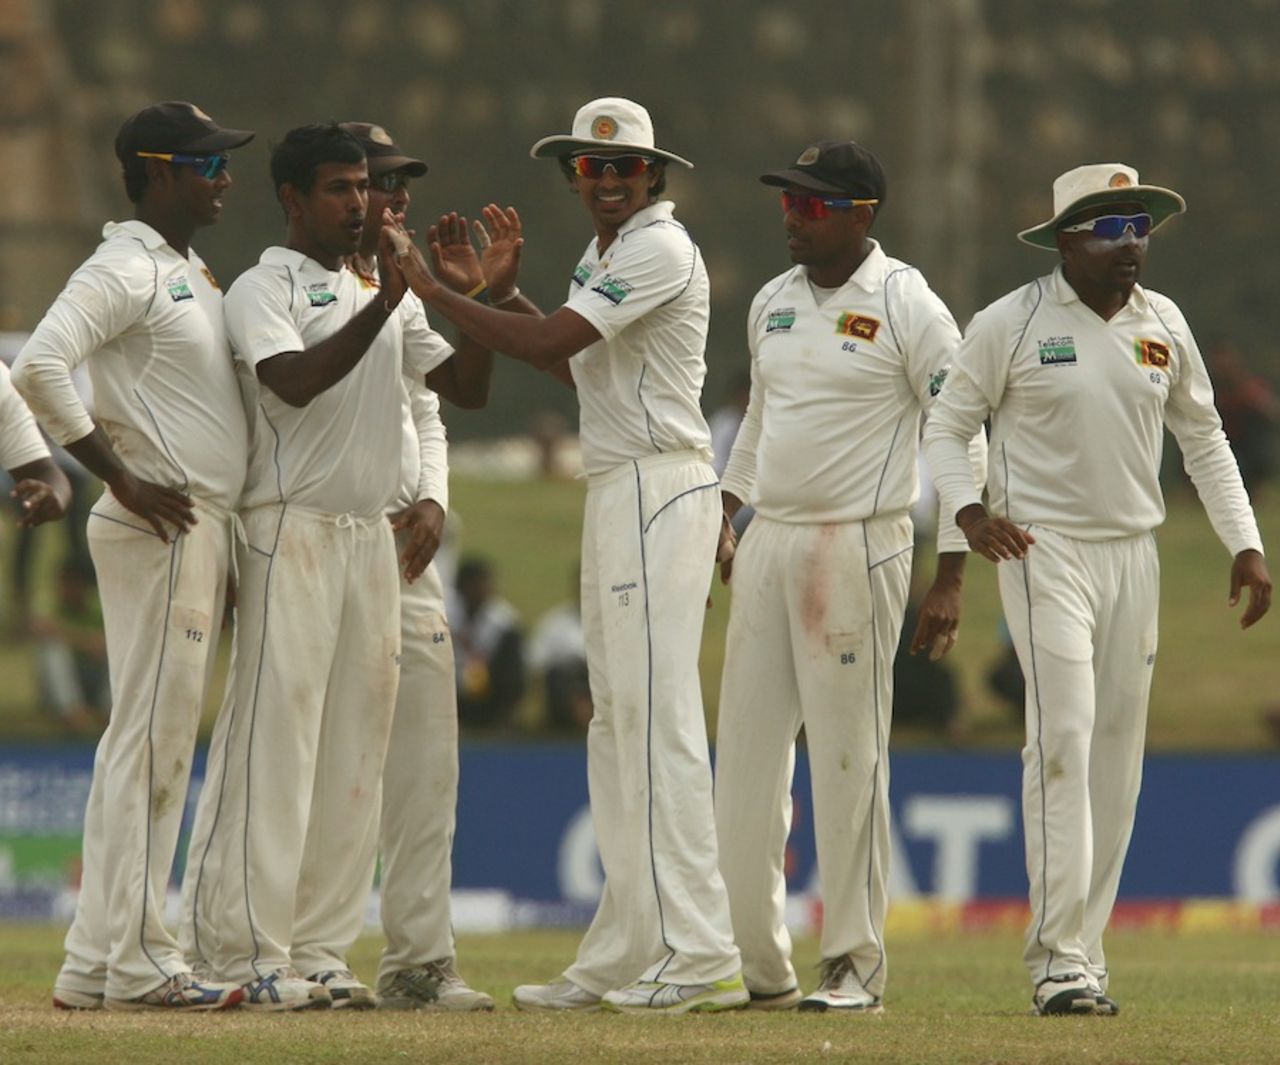 The Sri Lankans celebrate Younis Khan's wicket, Sri Lanka v Pakistan, 1st Test, Galle, 4th day, June 25, 2012